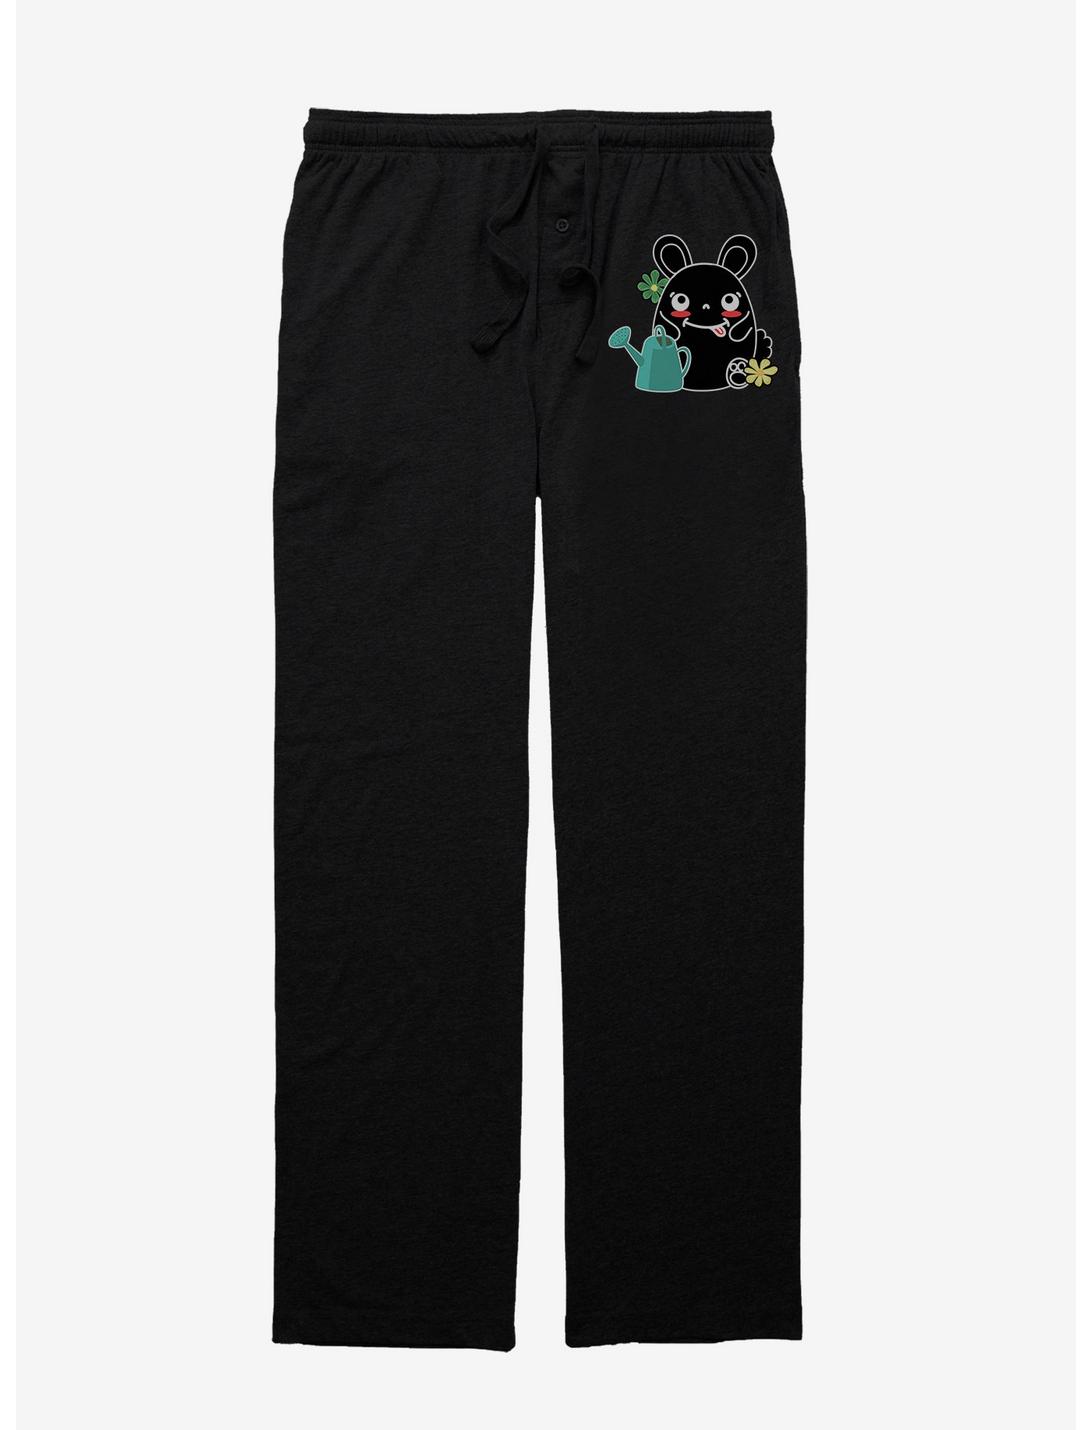 Plant Rabbit Pajama Pants, BLACK, hi-res